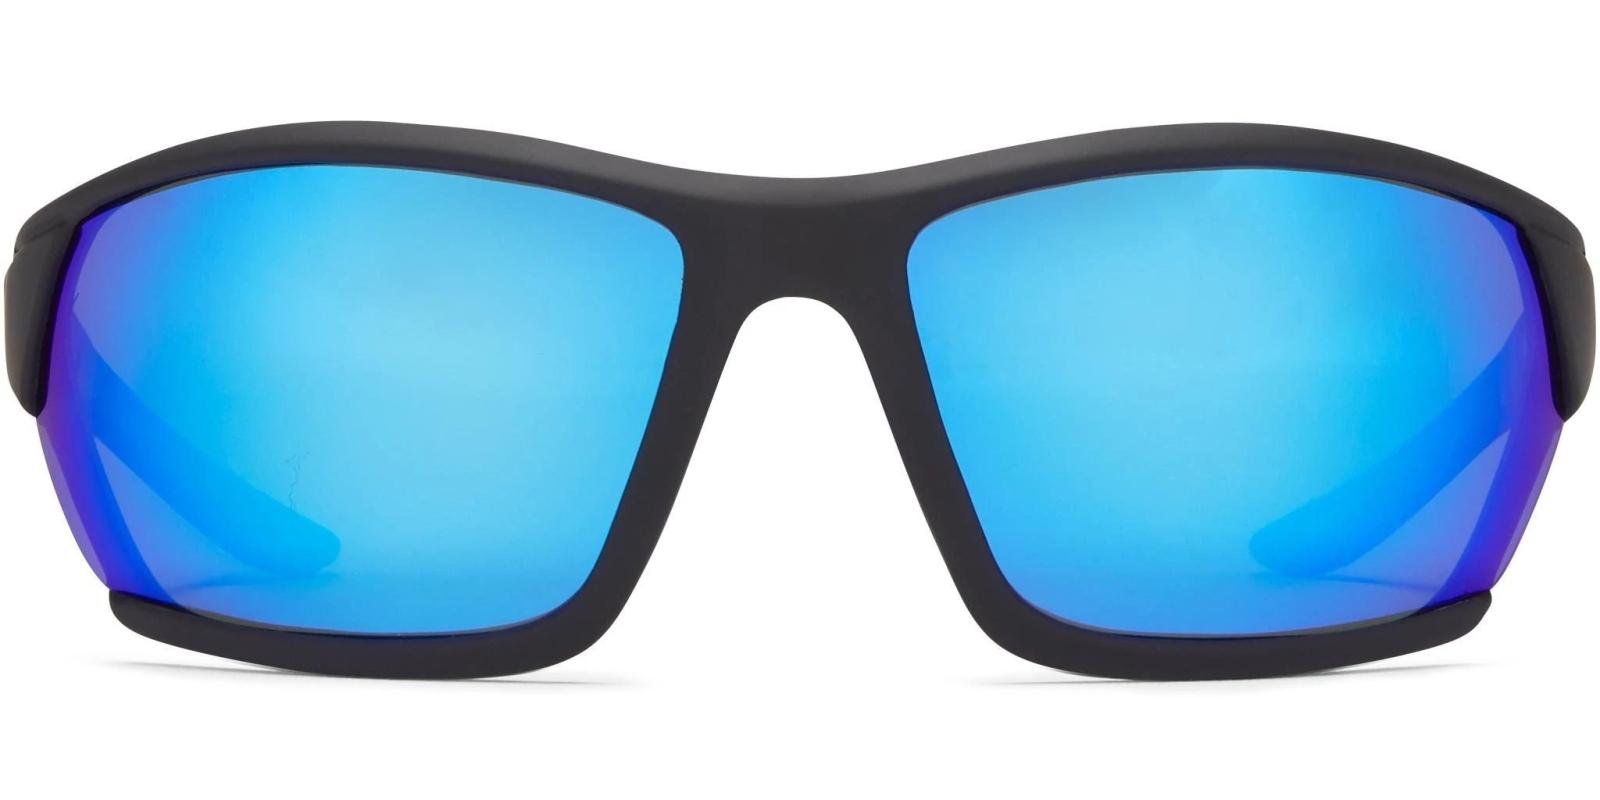 icu Eyewear Breeze Sunglasses